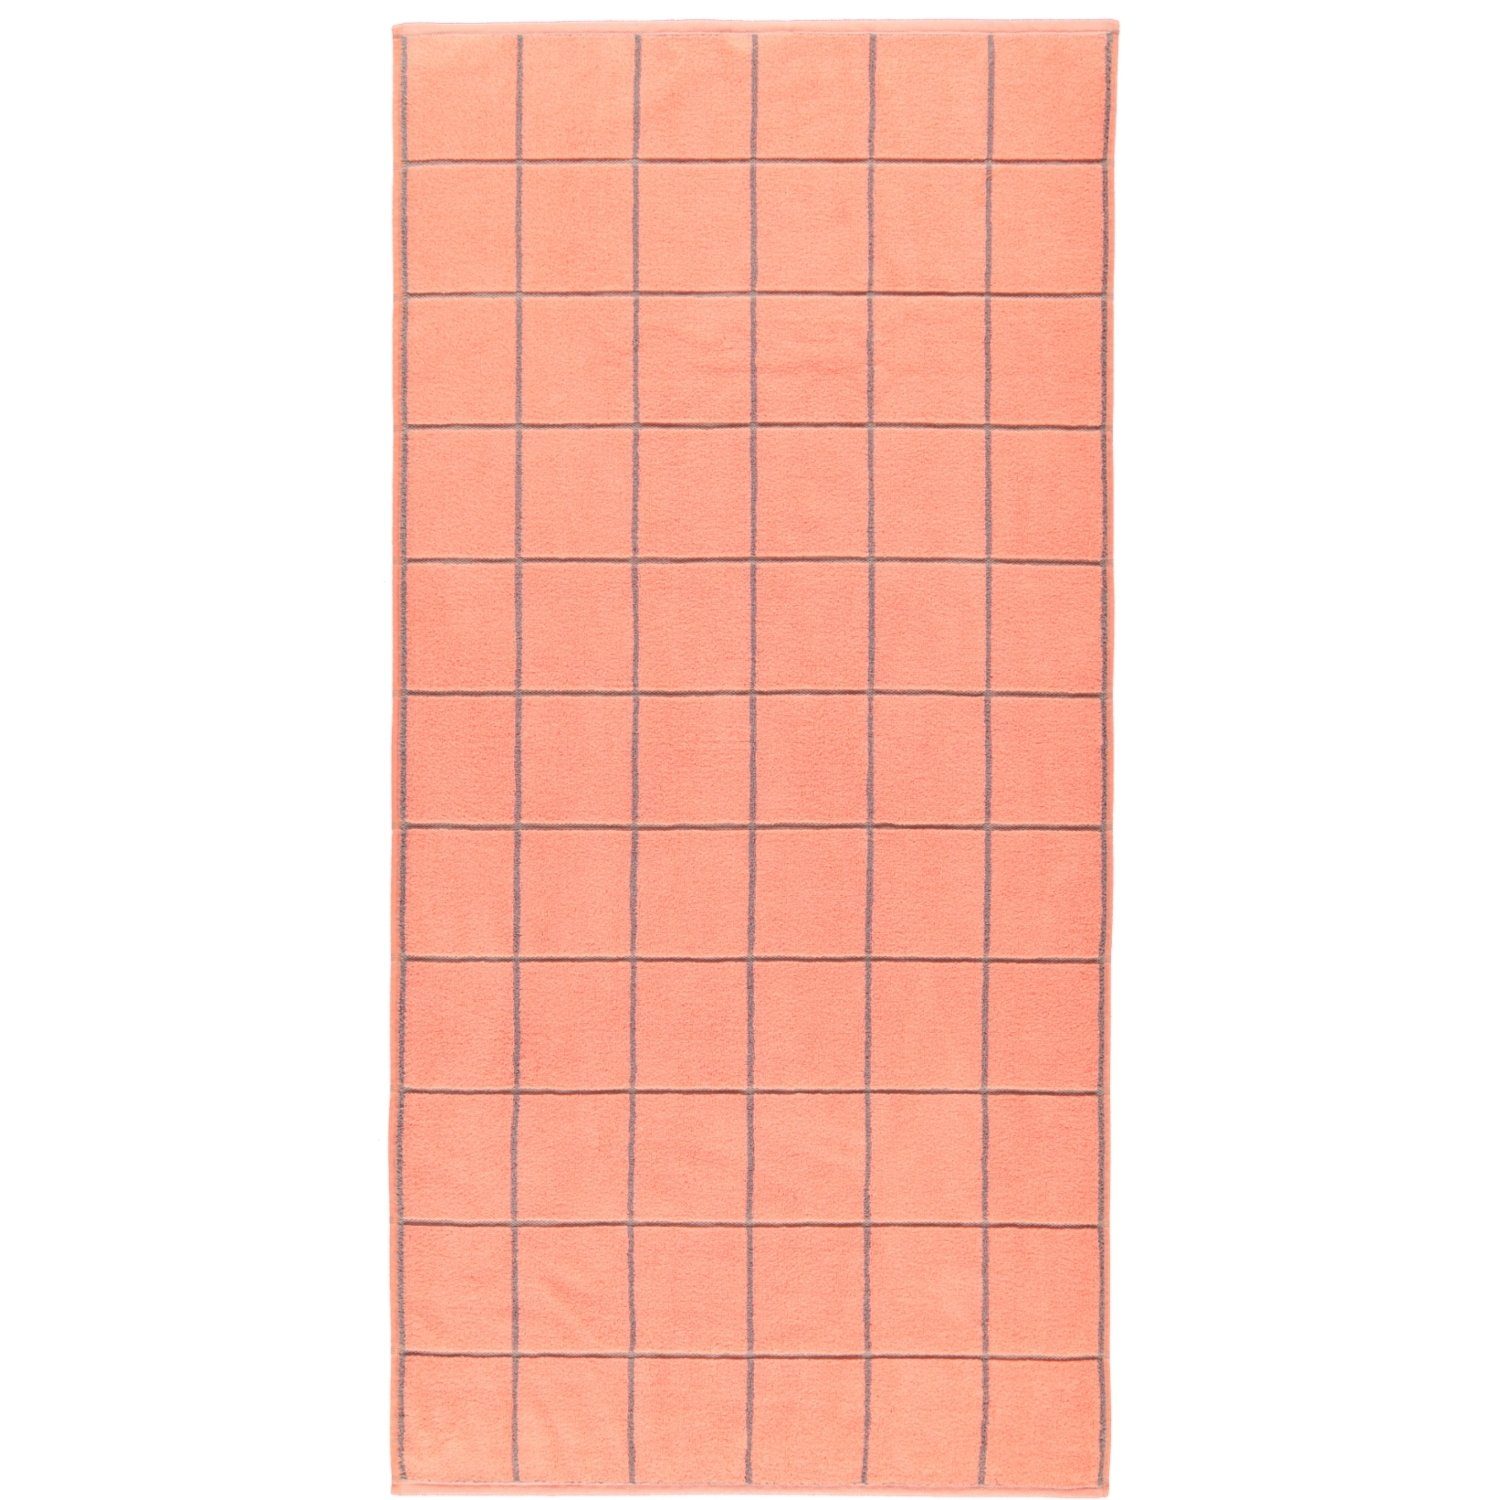 ROSS peach 100% pink Handtücher Überkaro 9032, Baumwolle